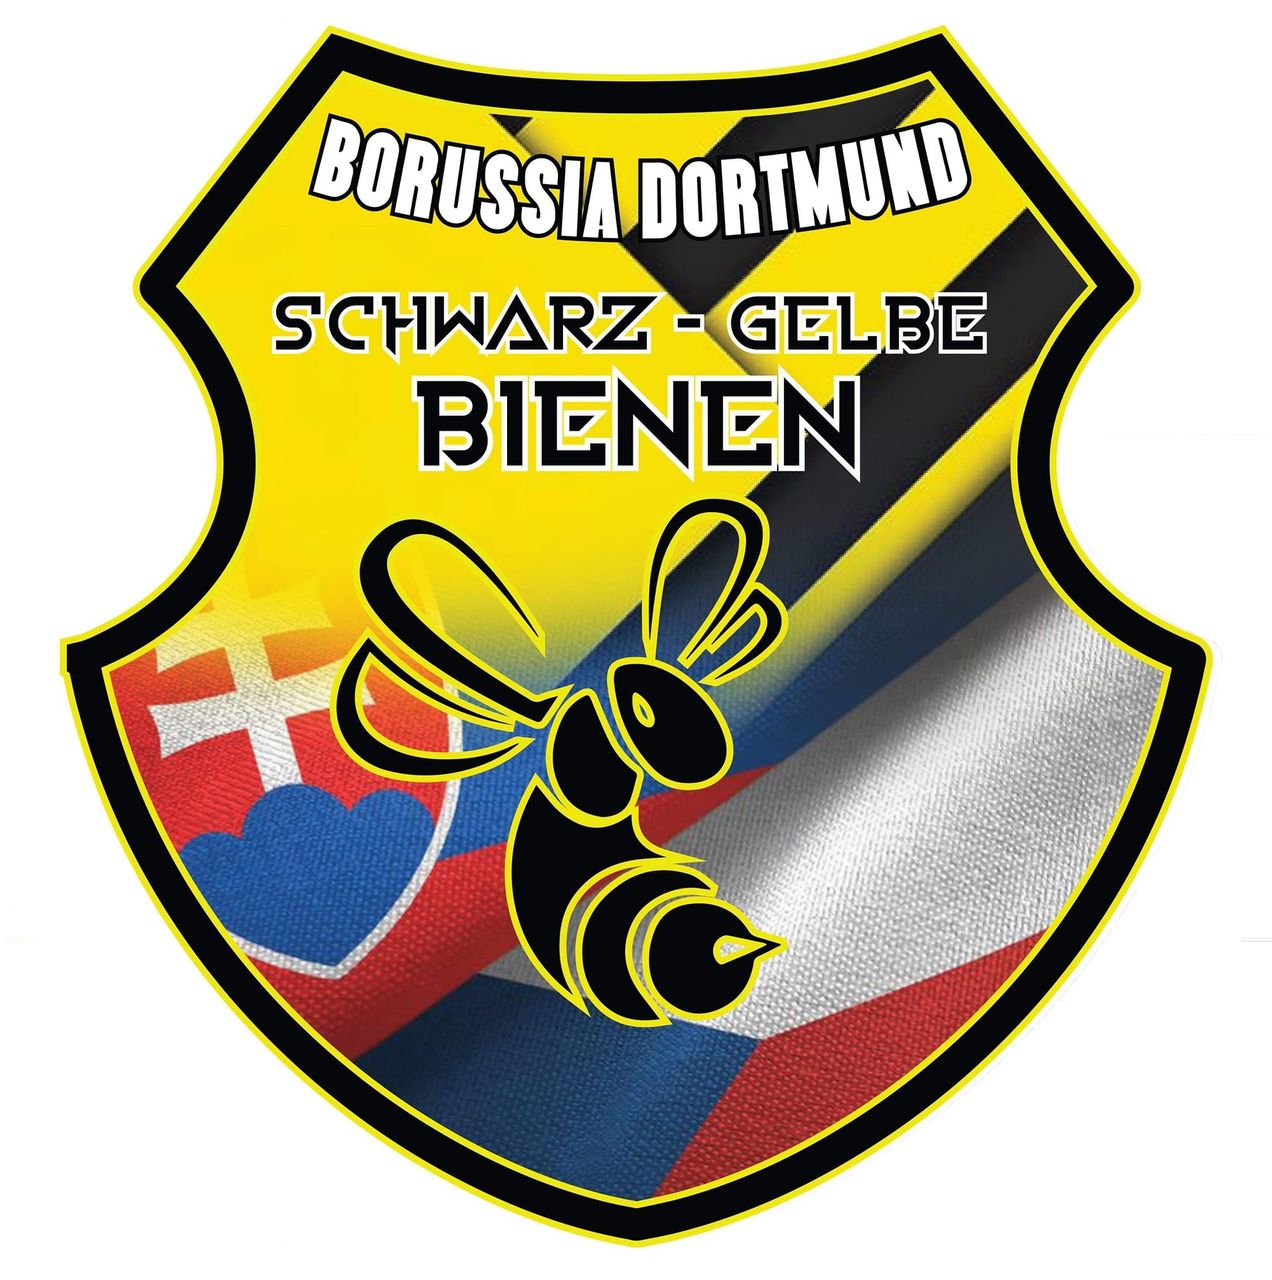 Schwarz-Gelbe Bienen (CZ)